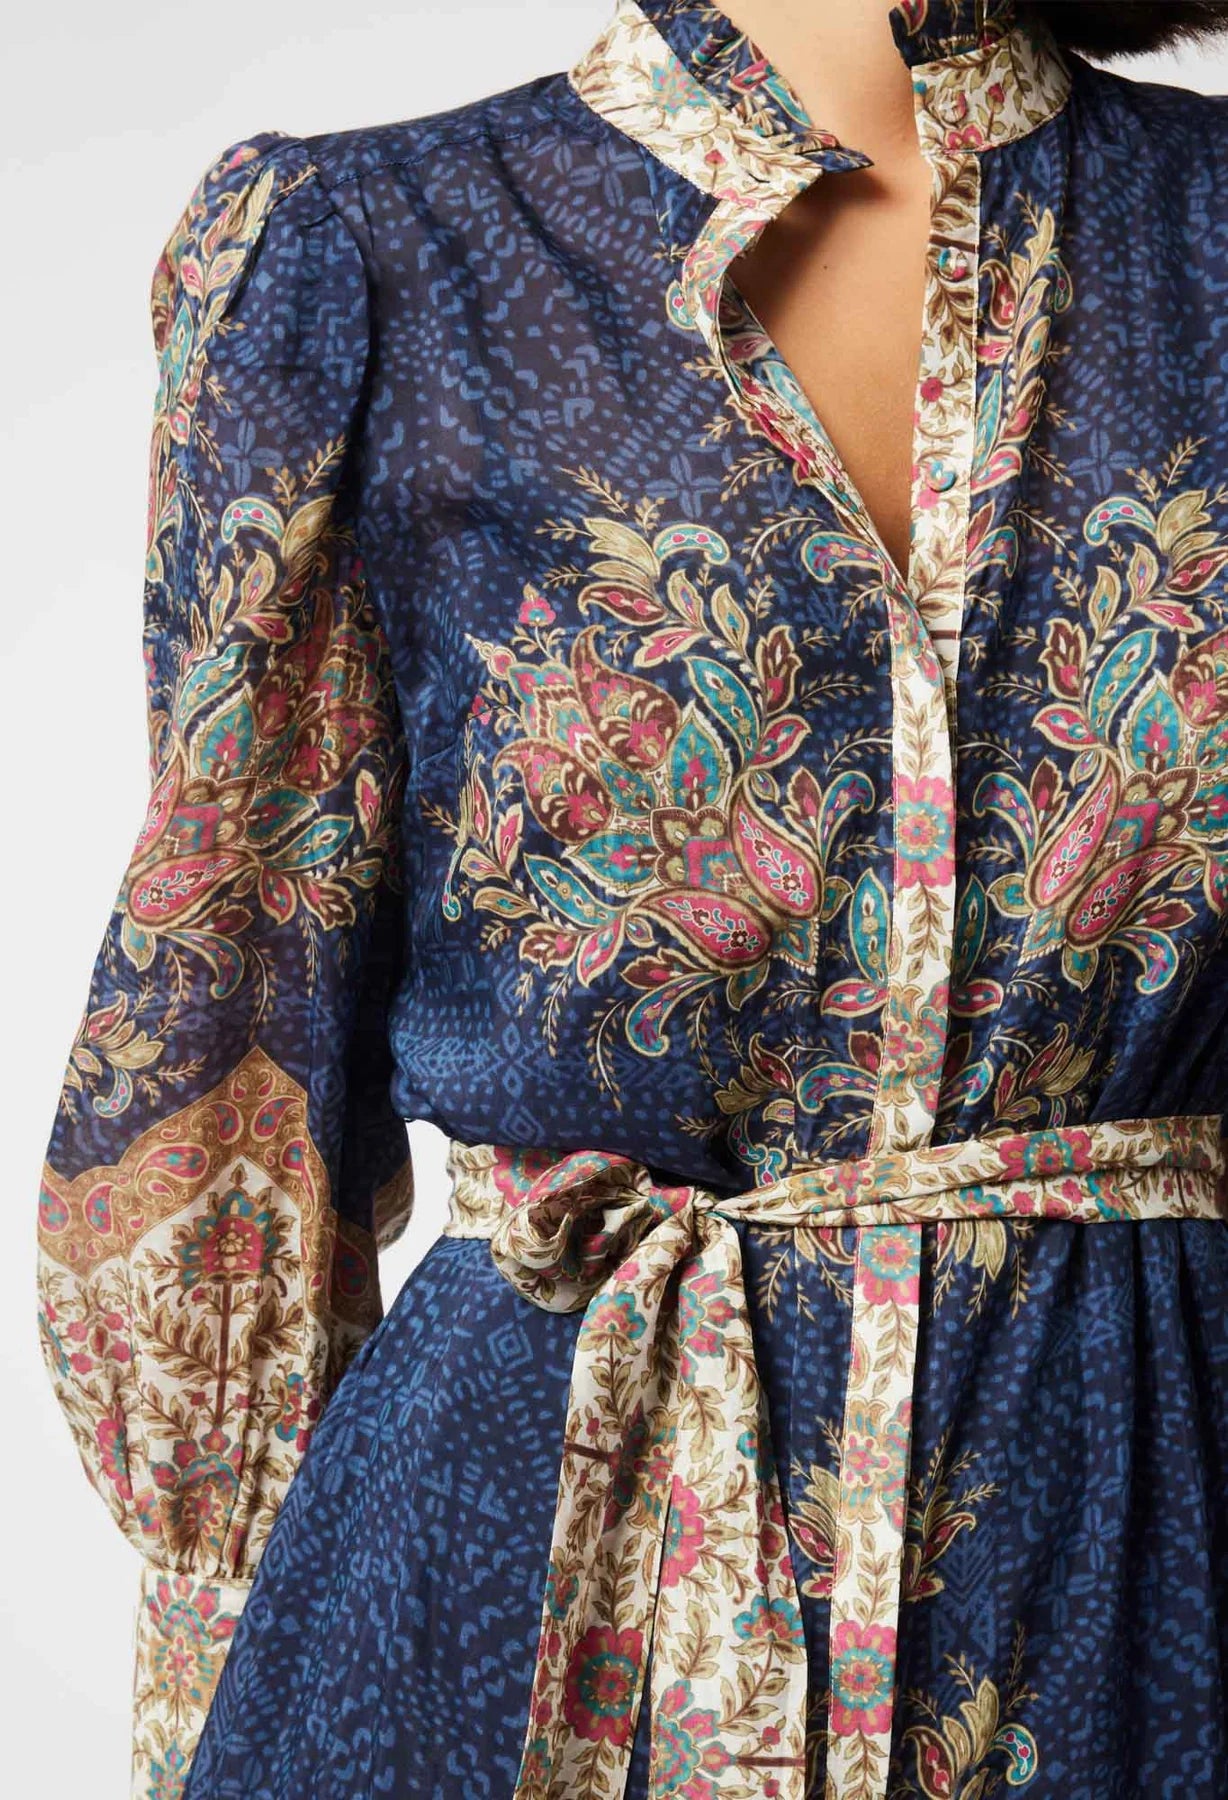 Imperial cotton silk contrast trim dress, oriental print